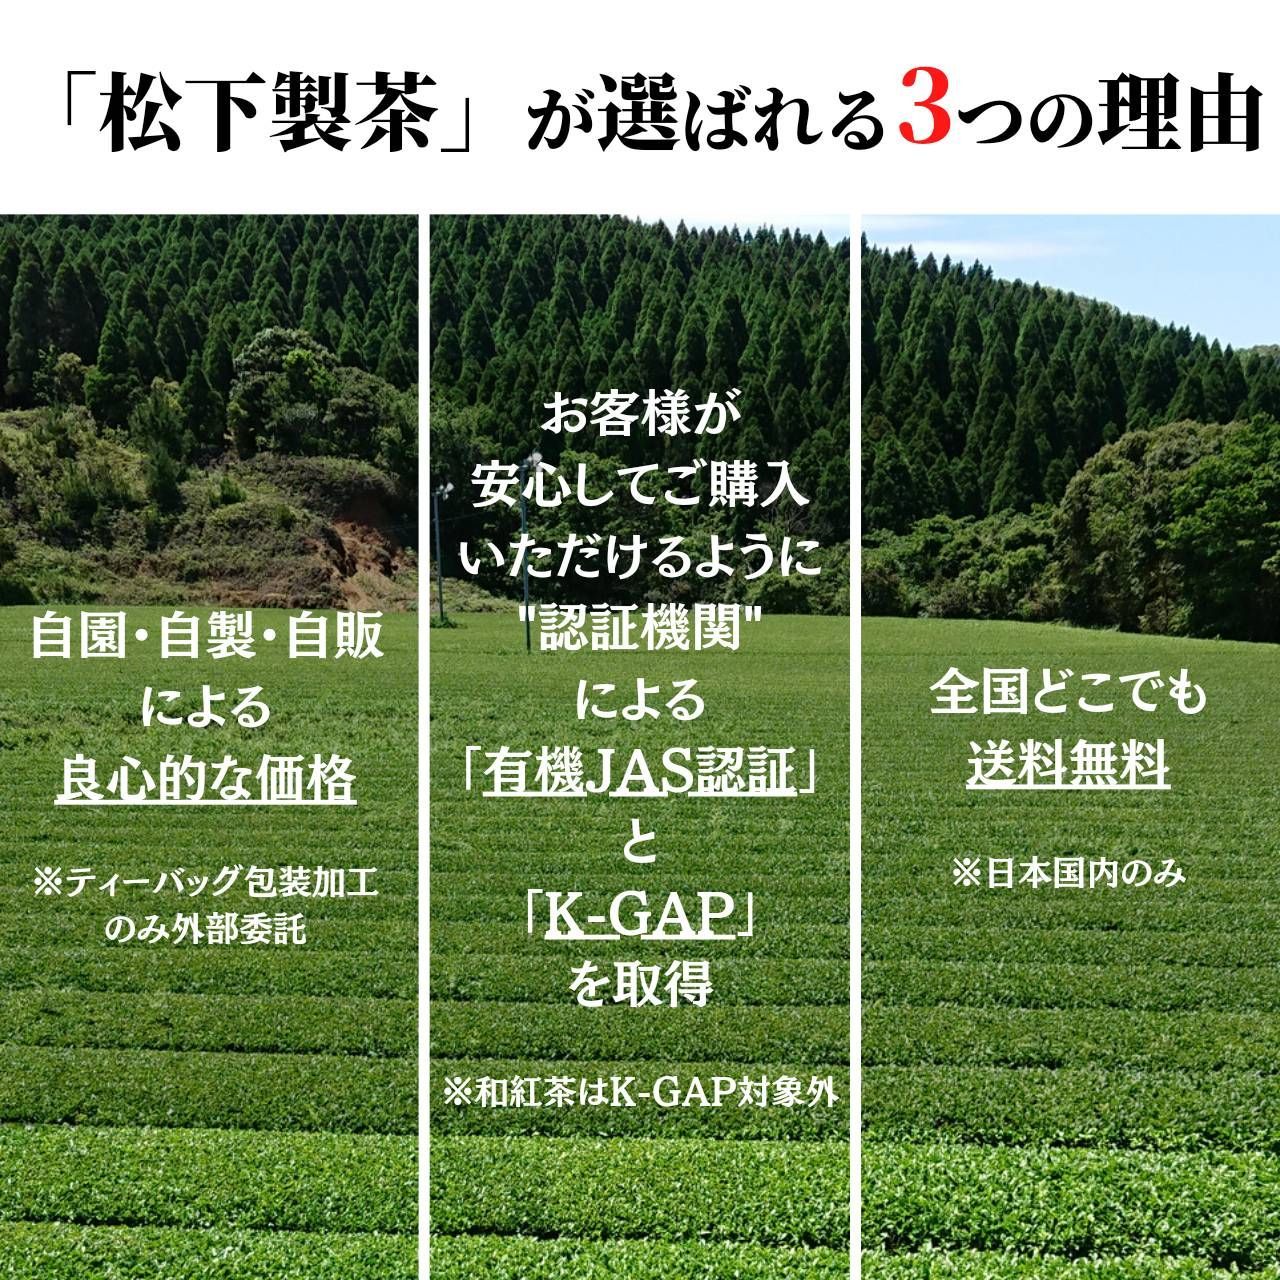 【2022年産/希少品種】種子島の有機緑茶『松寿』 茶葉(リーフ) 100g-2